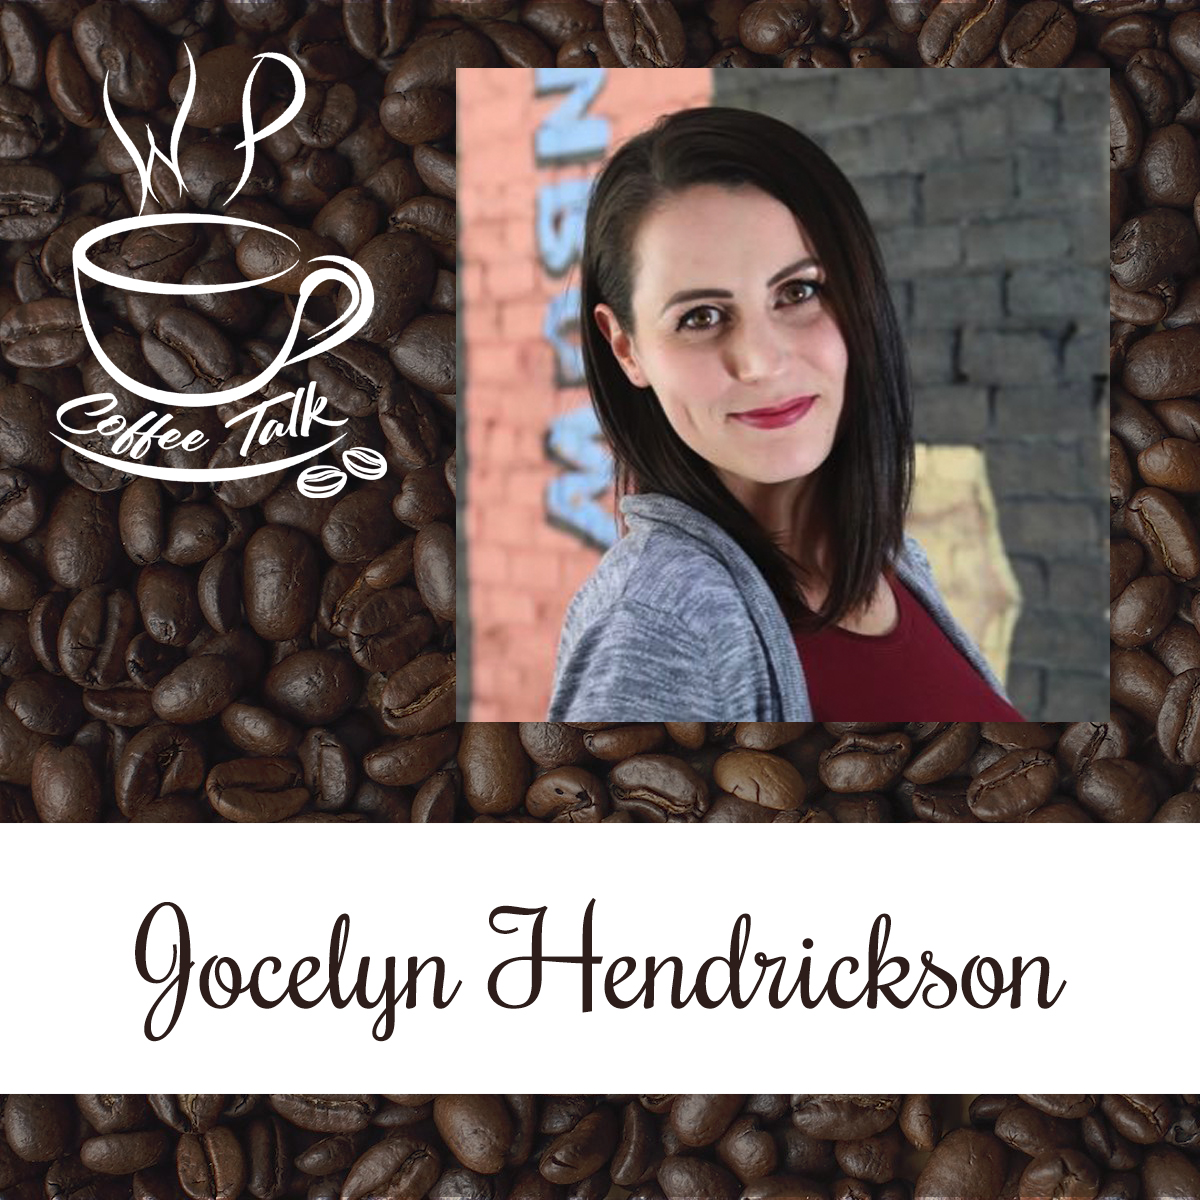 WPCoffeeTalk: Jocelyn Hendrickson